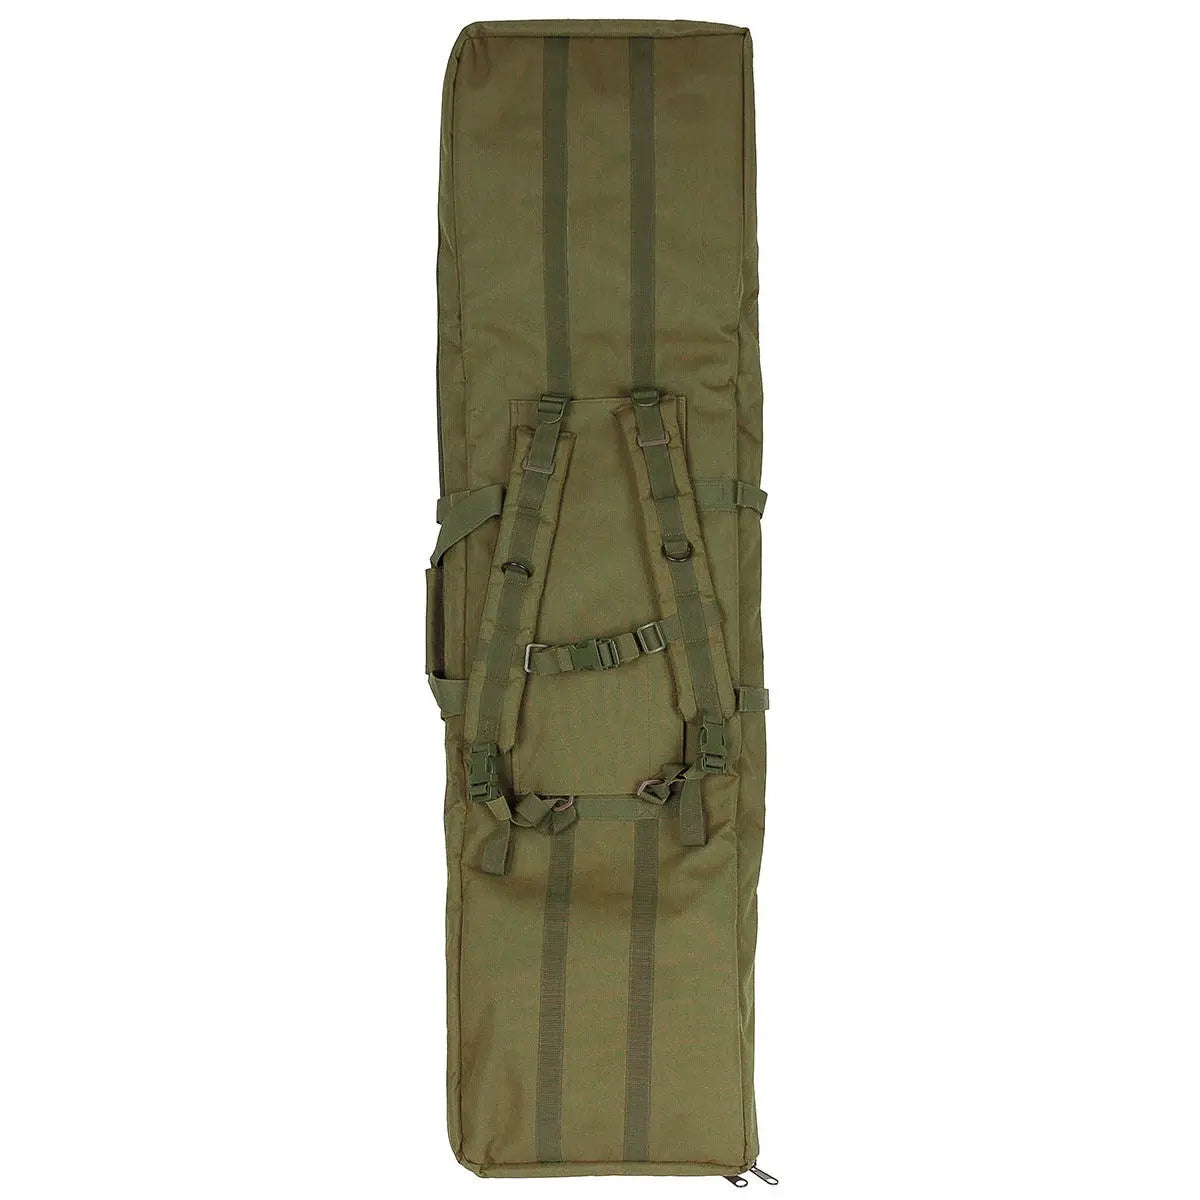 Rifle Bag, "Large", OD green, for 2 rifles NSO Gear Gun Cases & Range Bags